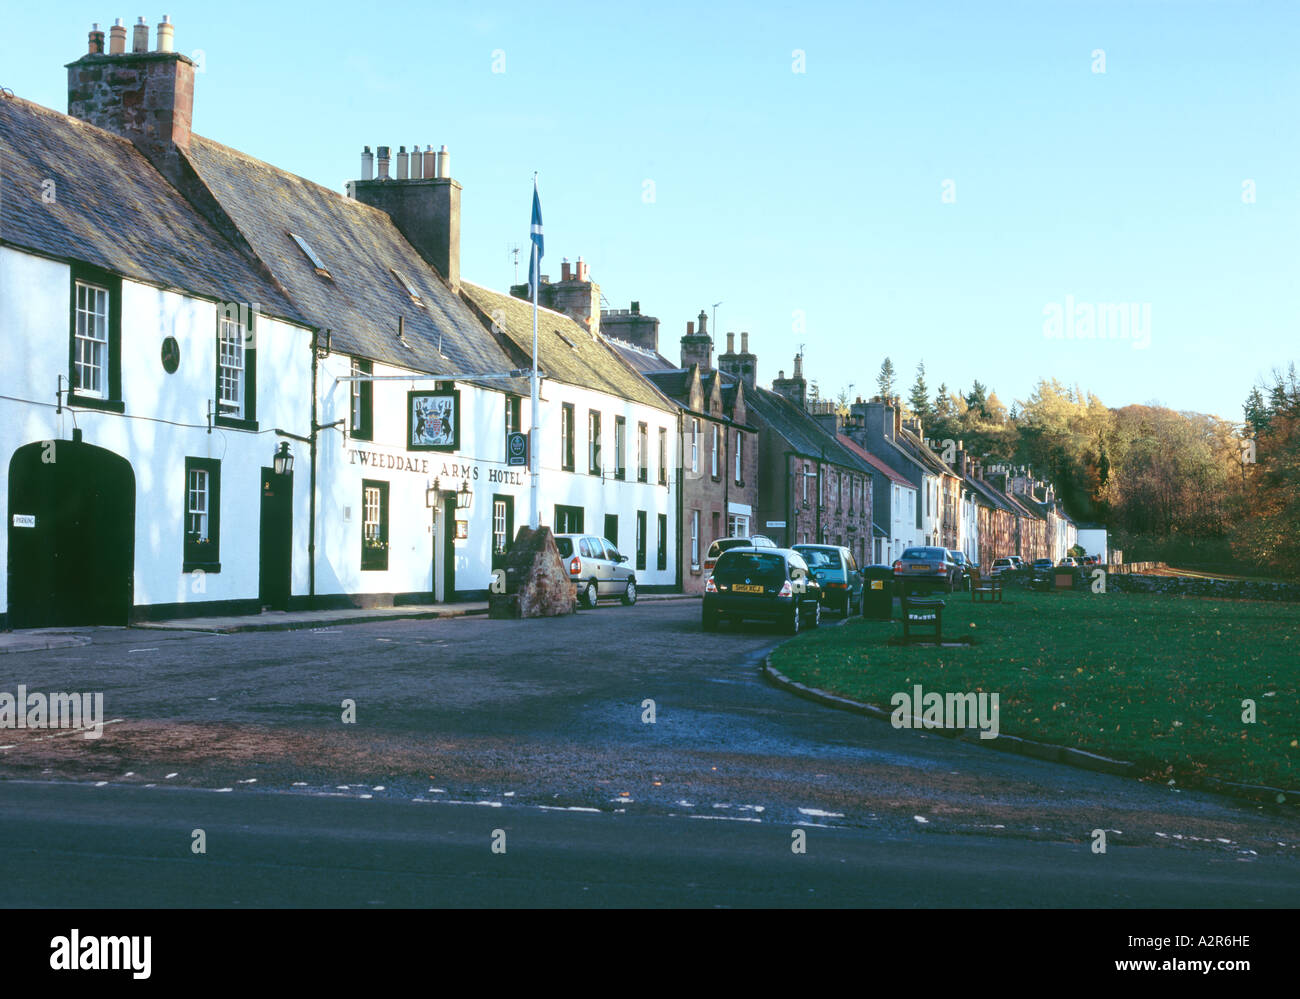 Tweeddale Arms Hotel et Village Green, Gifford, East Lothian, Scotland Banque D'Images